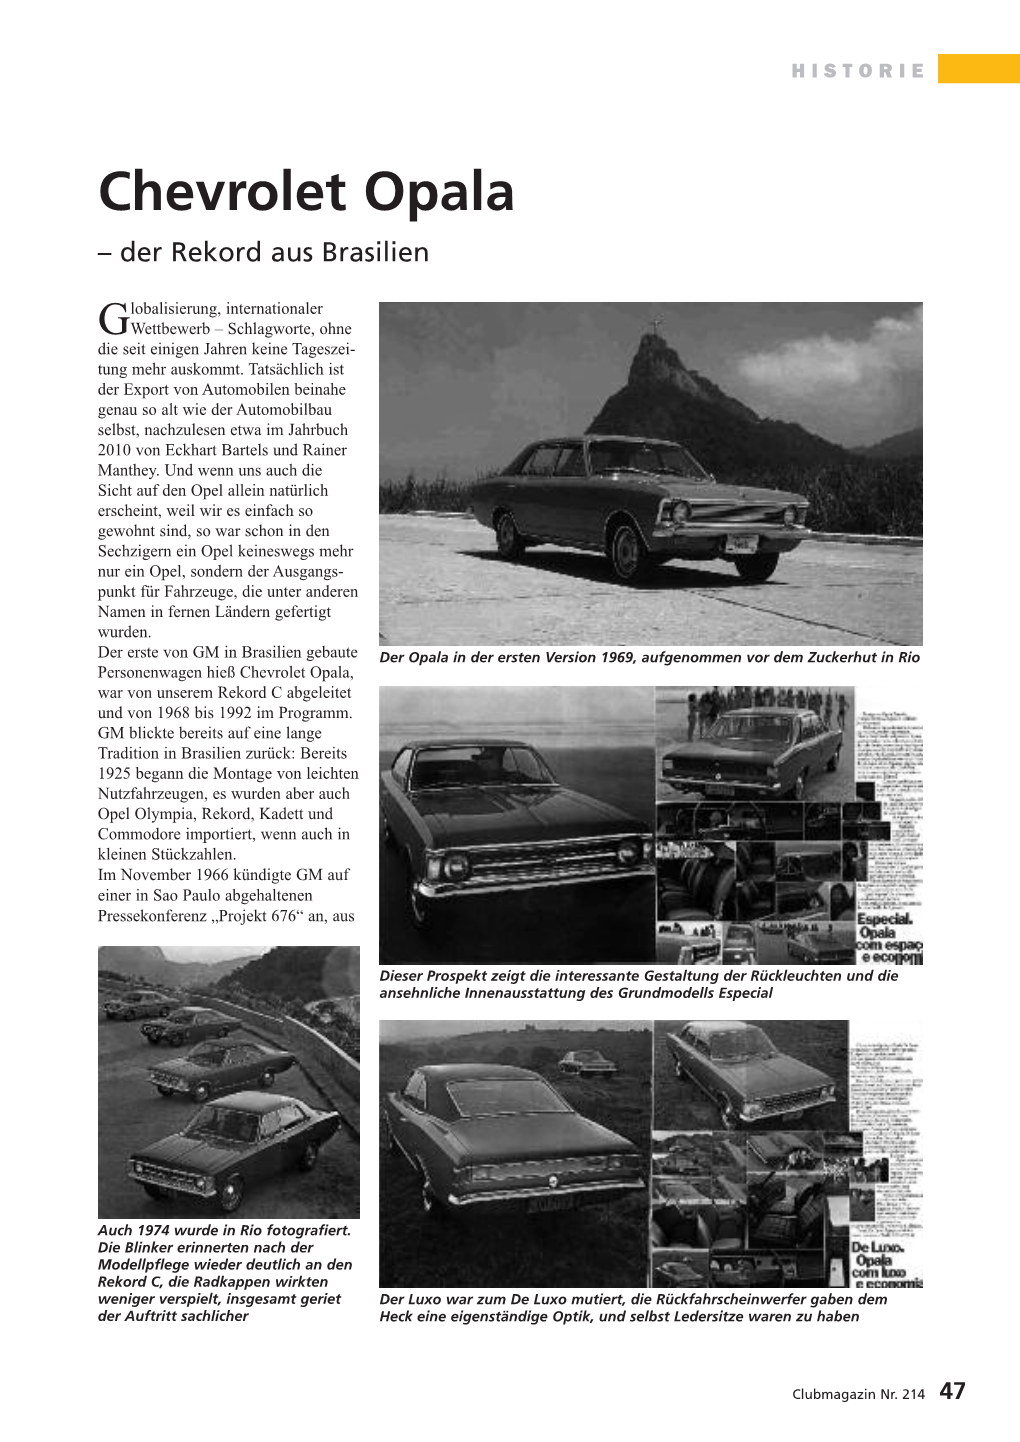 Chevrolet Opala – Der Rekord Aus Brasilien